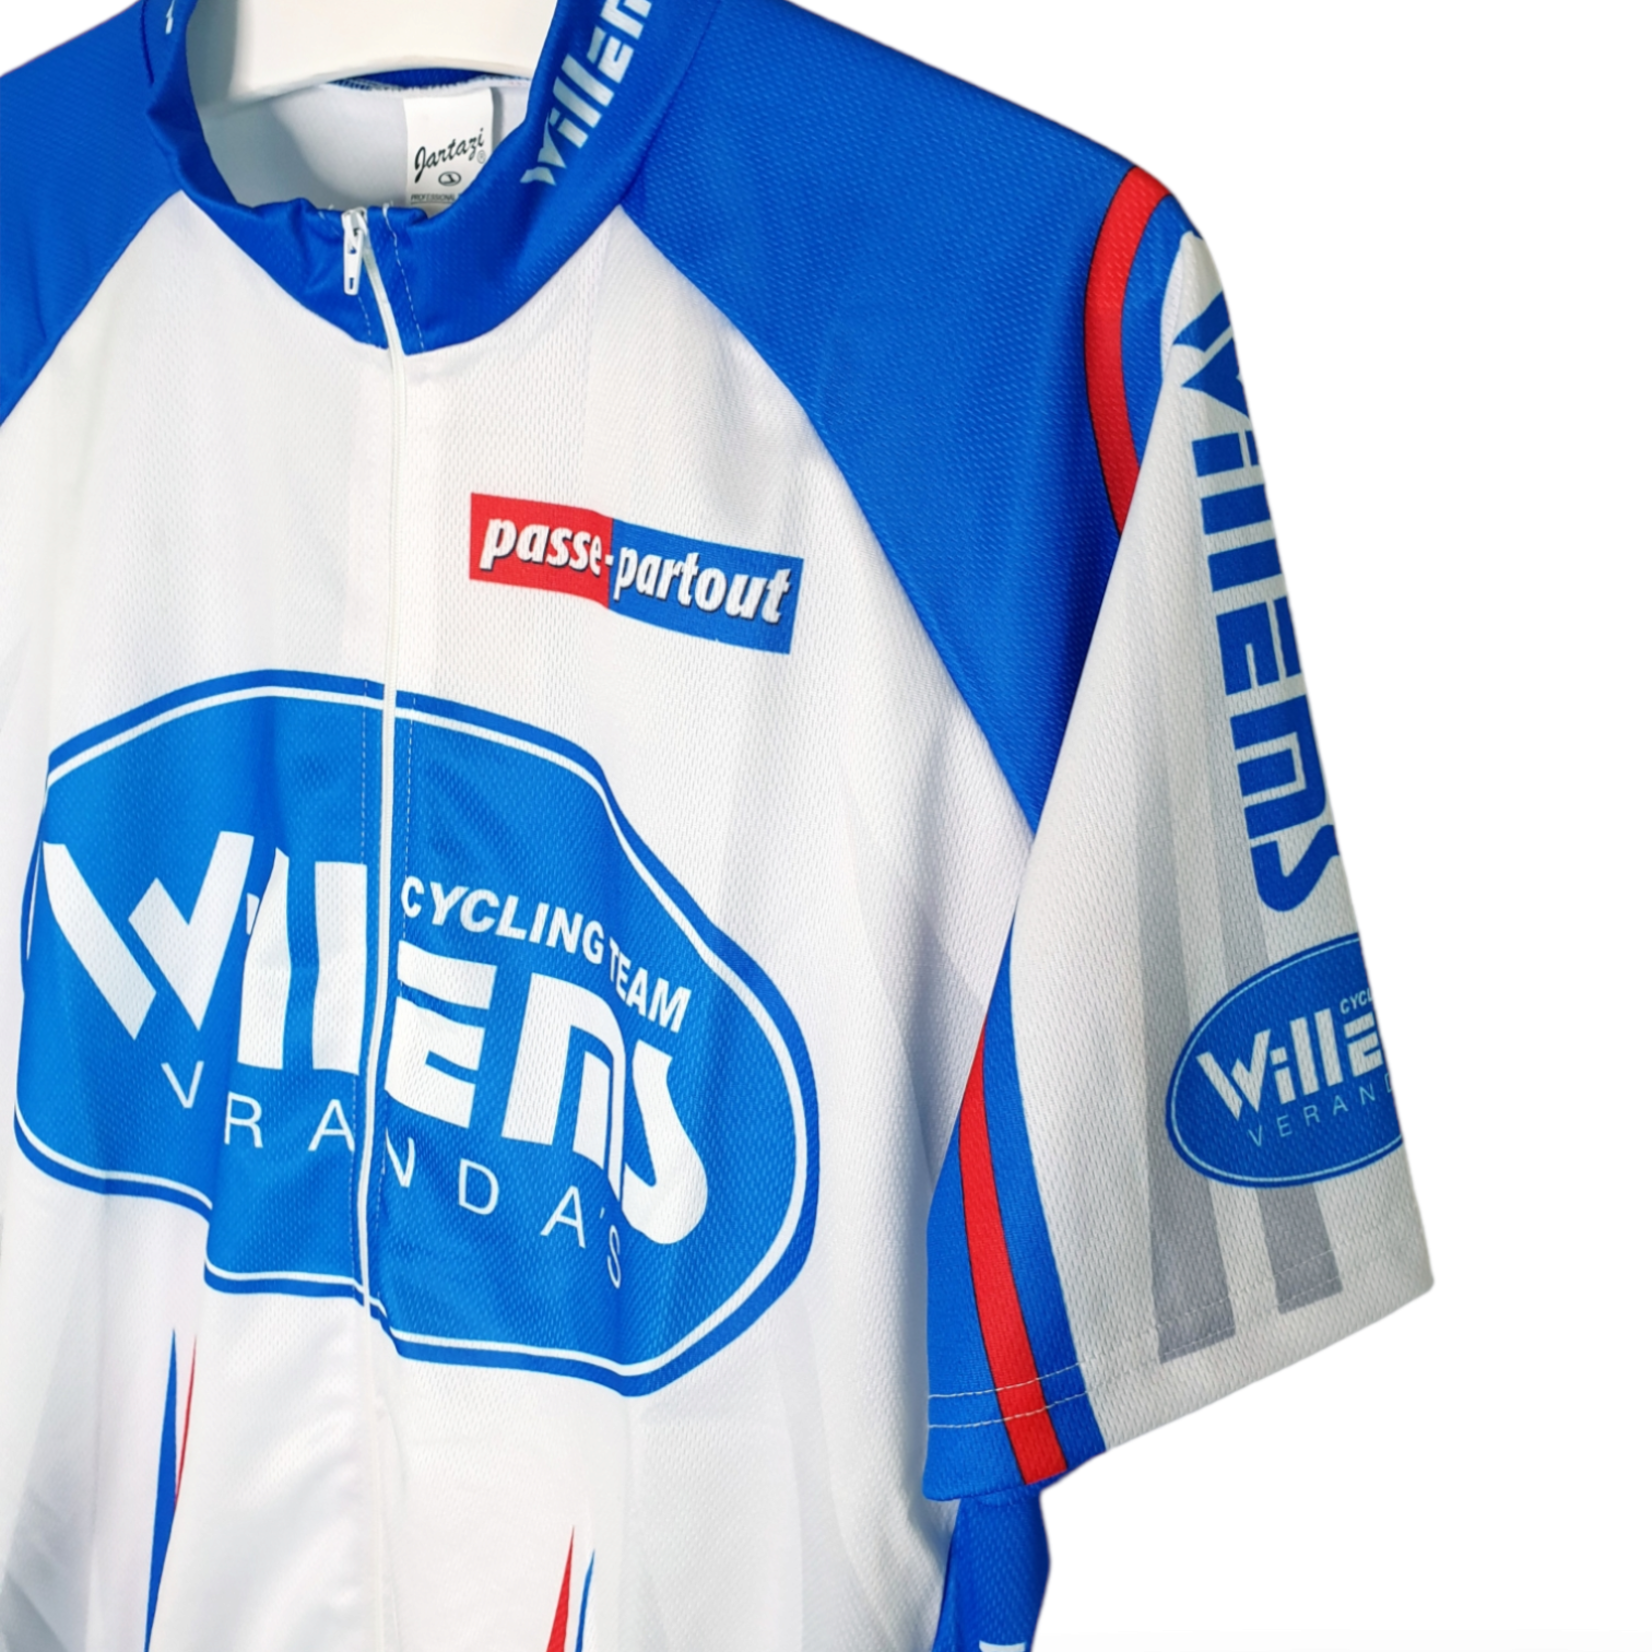 Jartazi Origineel Jartazi vintage wielershirt Veranda's Willems 2013